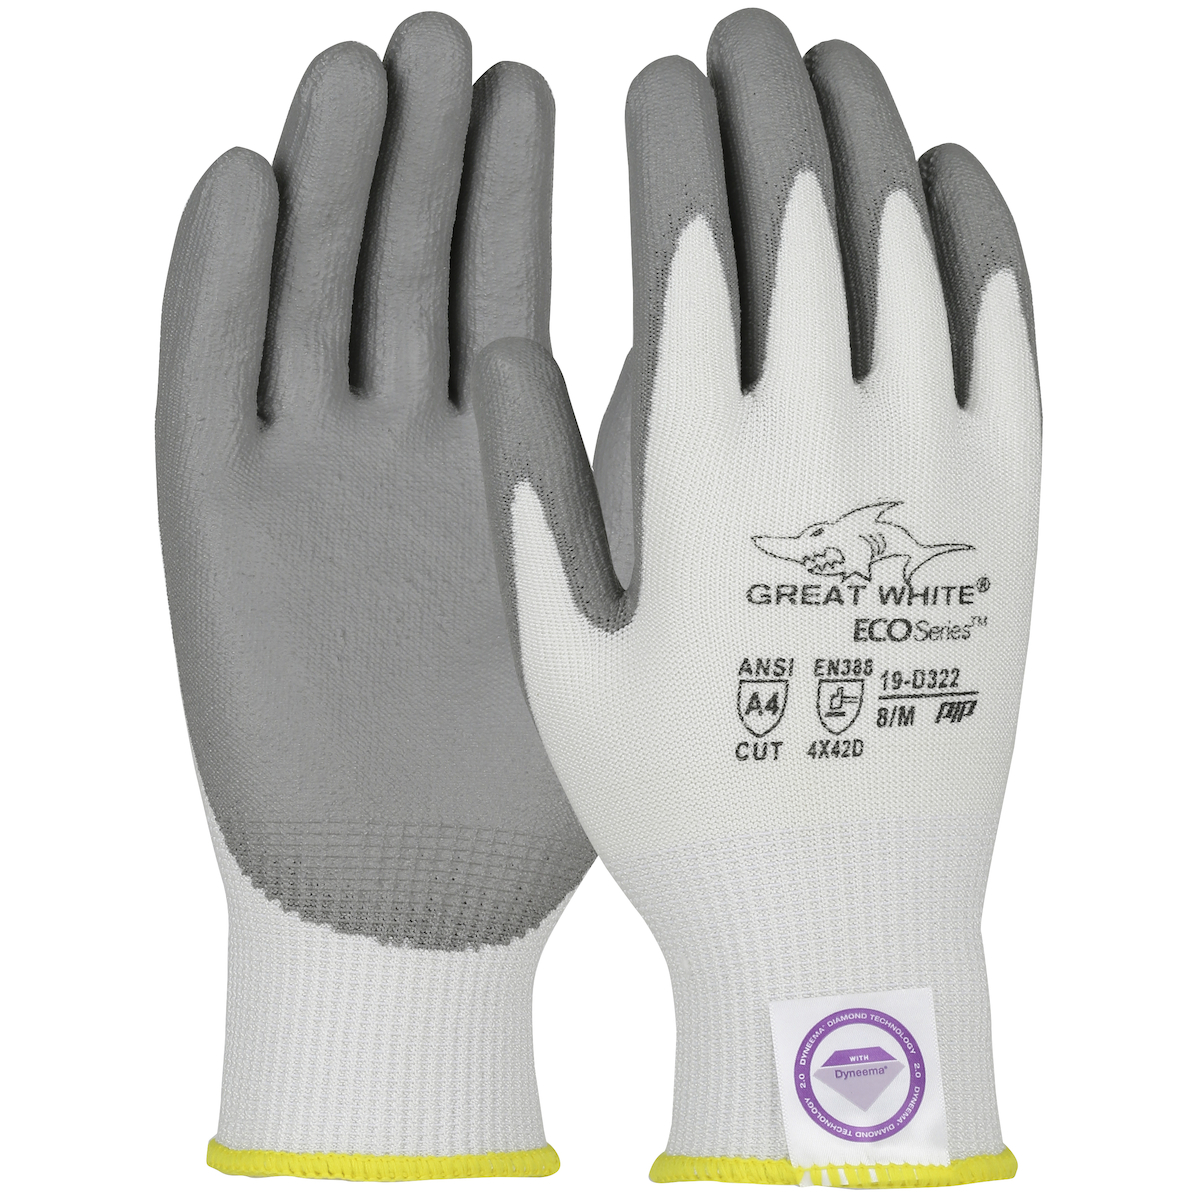 4 PIP G-tek 3gx 19-d322 Great White Dyneema Diamond PU Coated Gloves Large LG for sale online